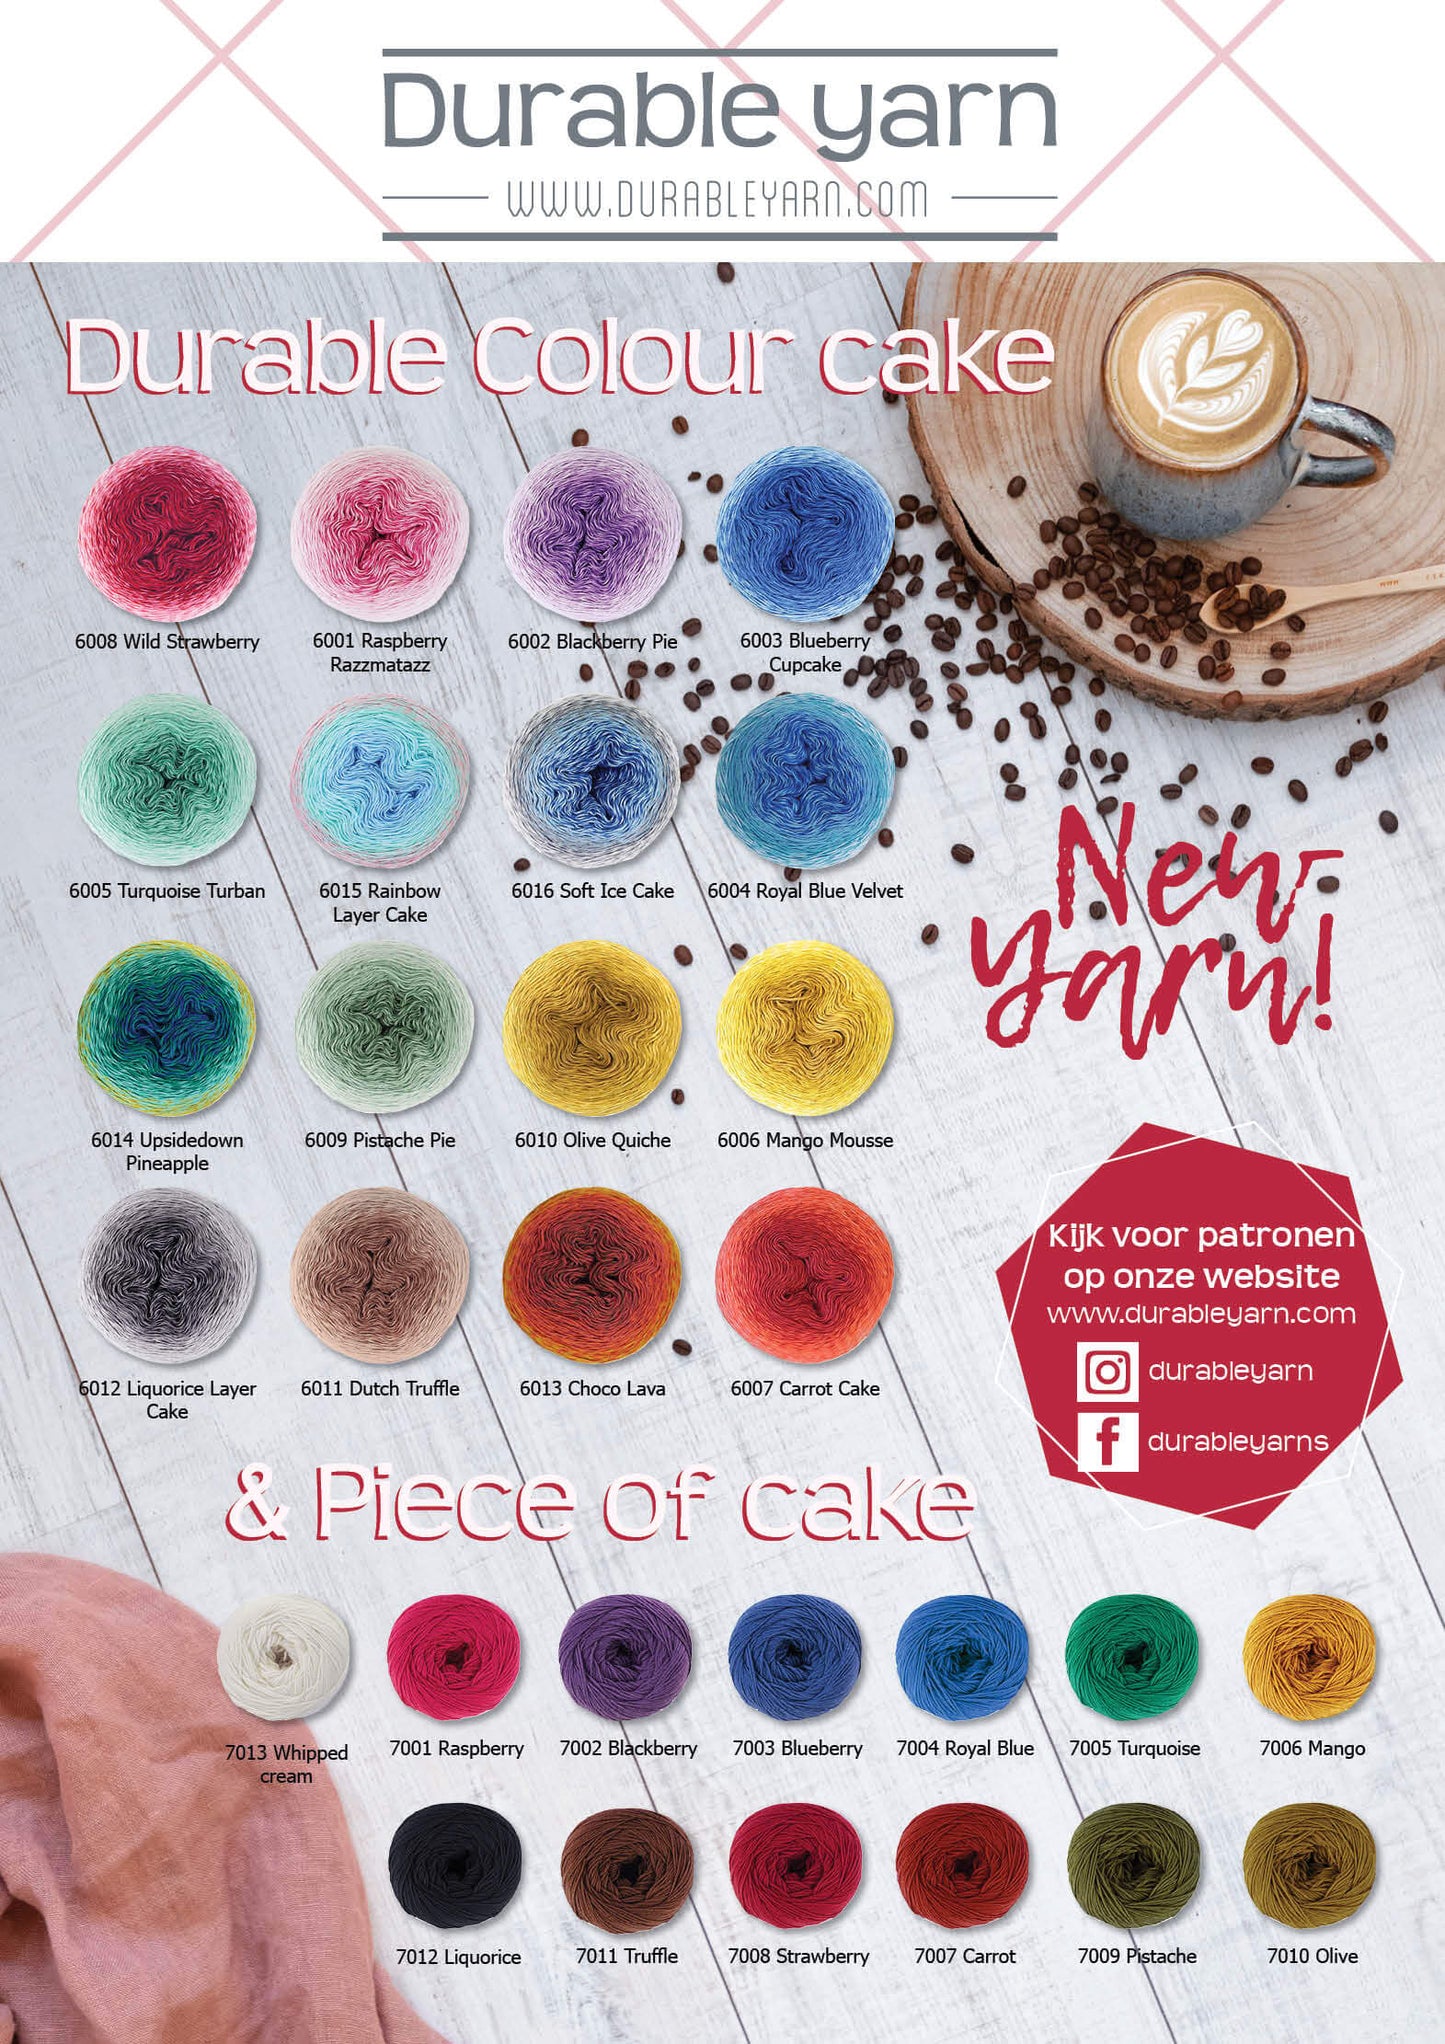 Durable Colour Cake - 6015 Rainbow Layer Cake